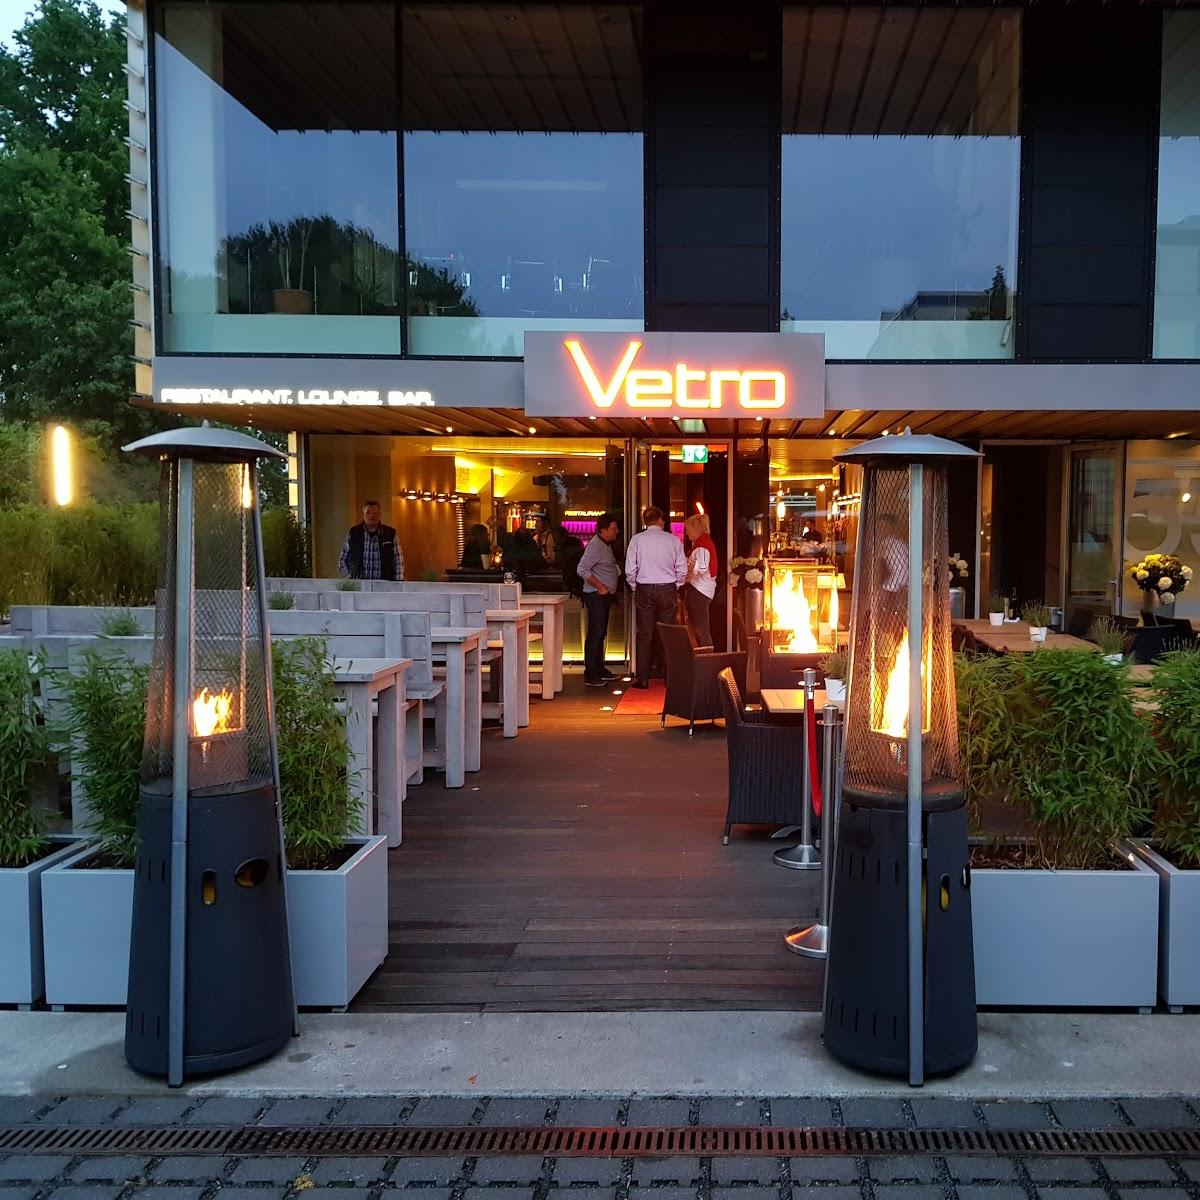 Restaurant "Vetro" in  Dortmund